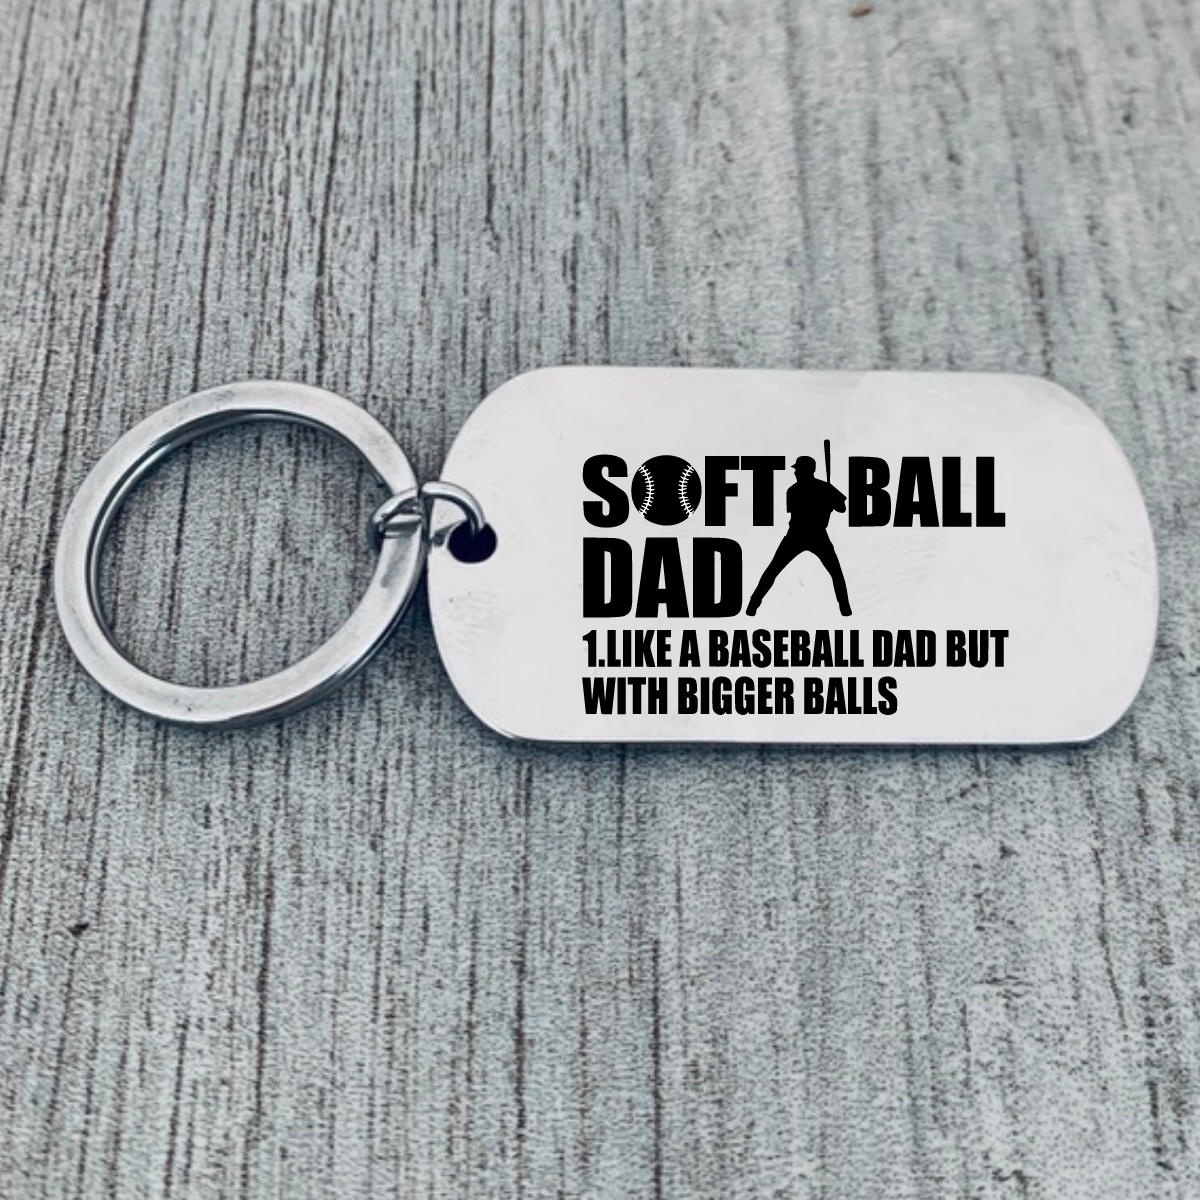 Softball Dad Keychain - Bigger Balls